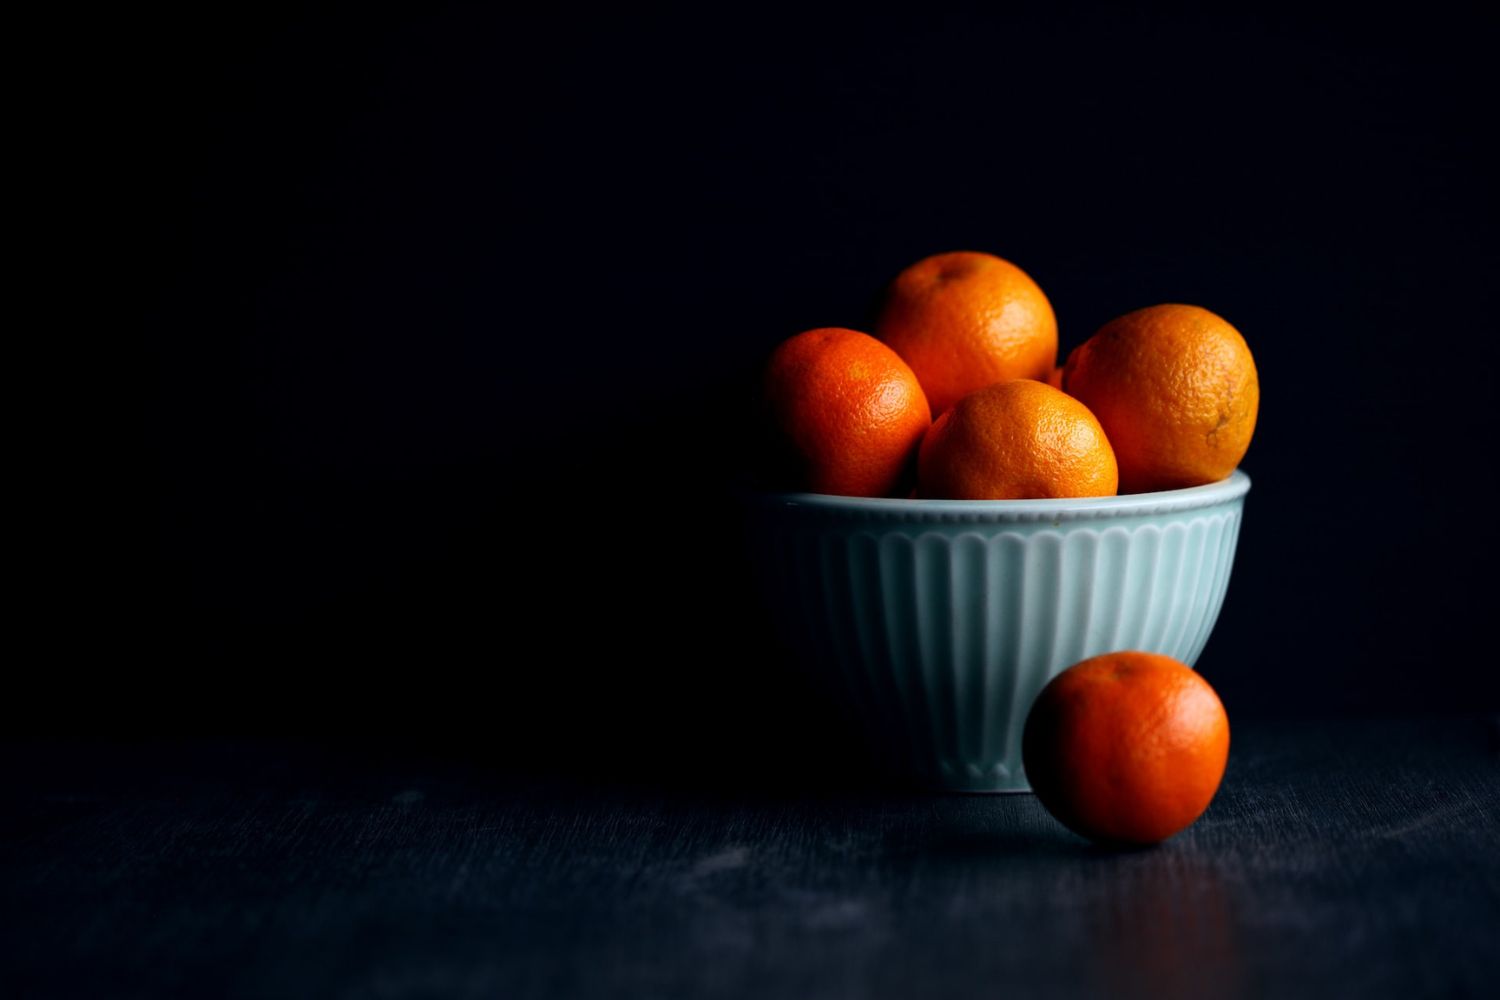 still photo of oranges in bowl by Alexander Grey on Unsplash